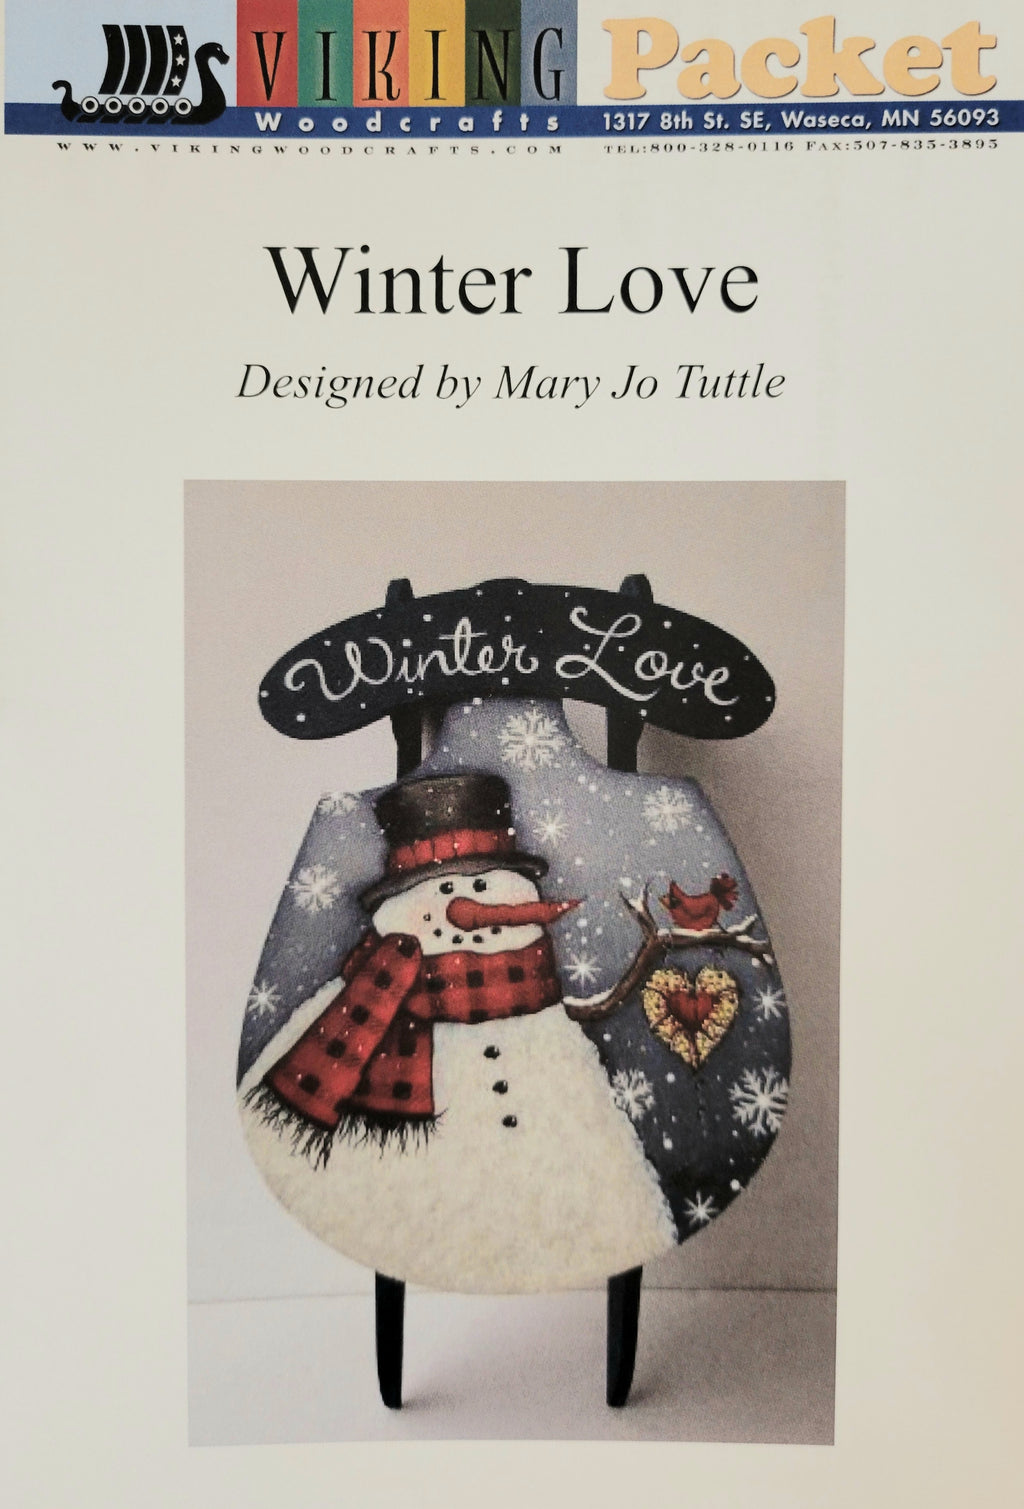 Winter Love packet by Mary Jo Tuttle